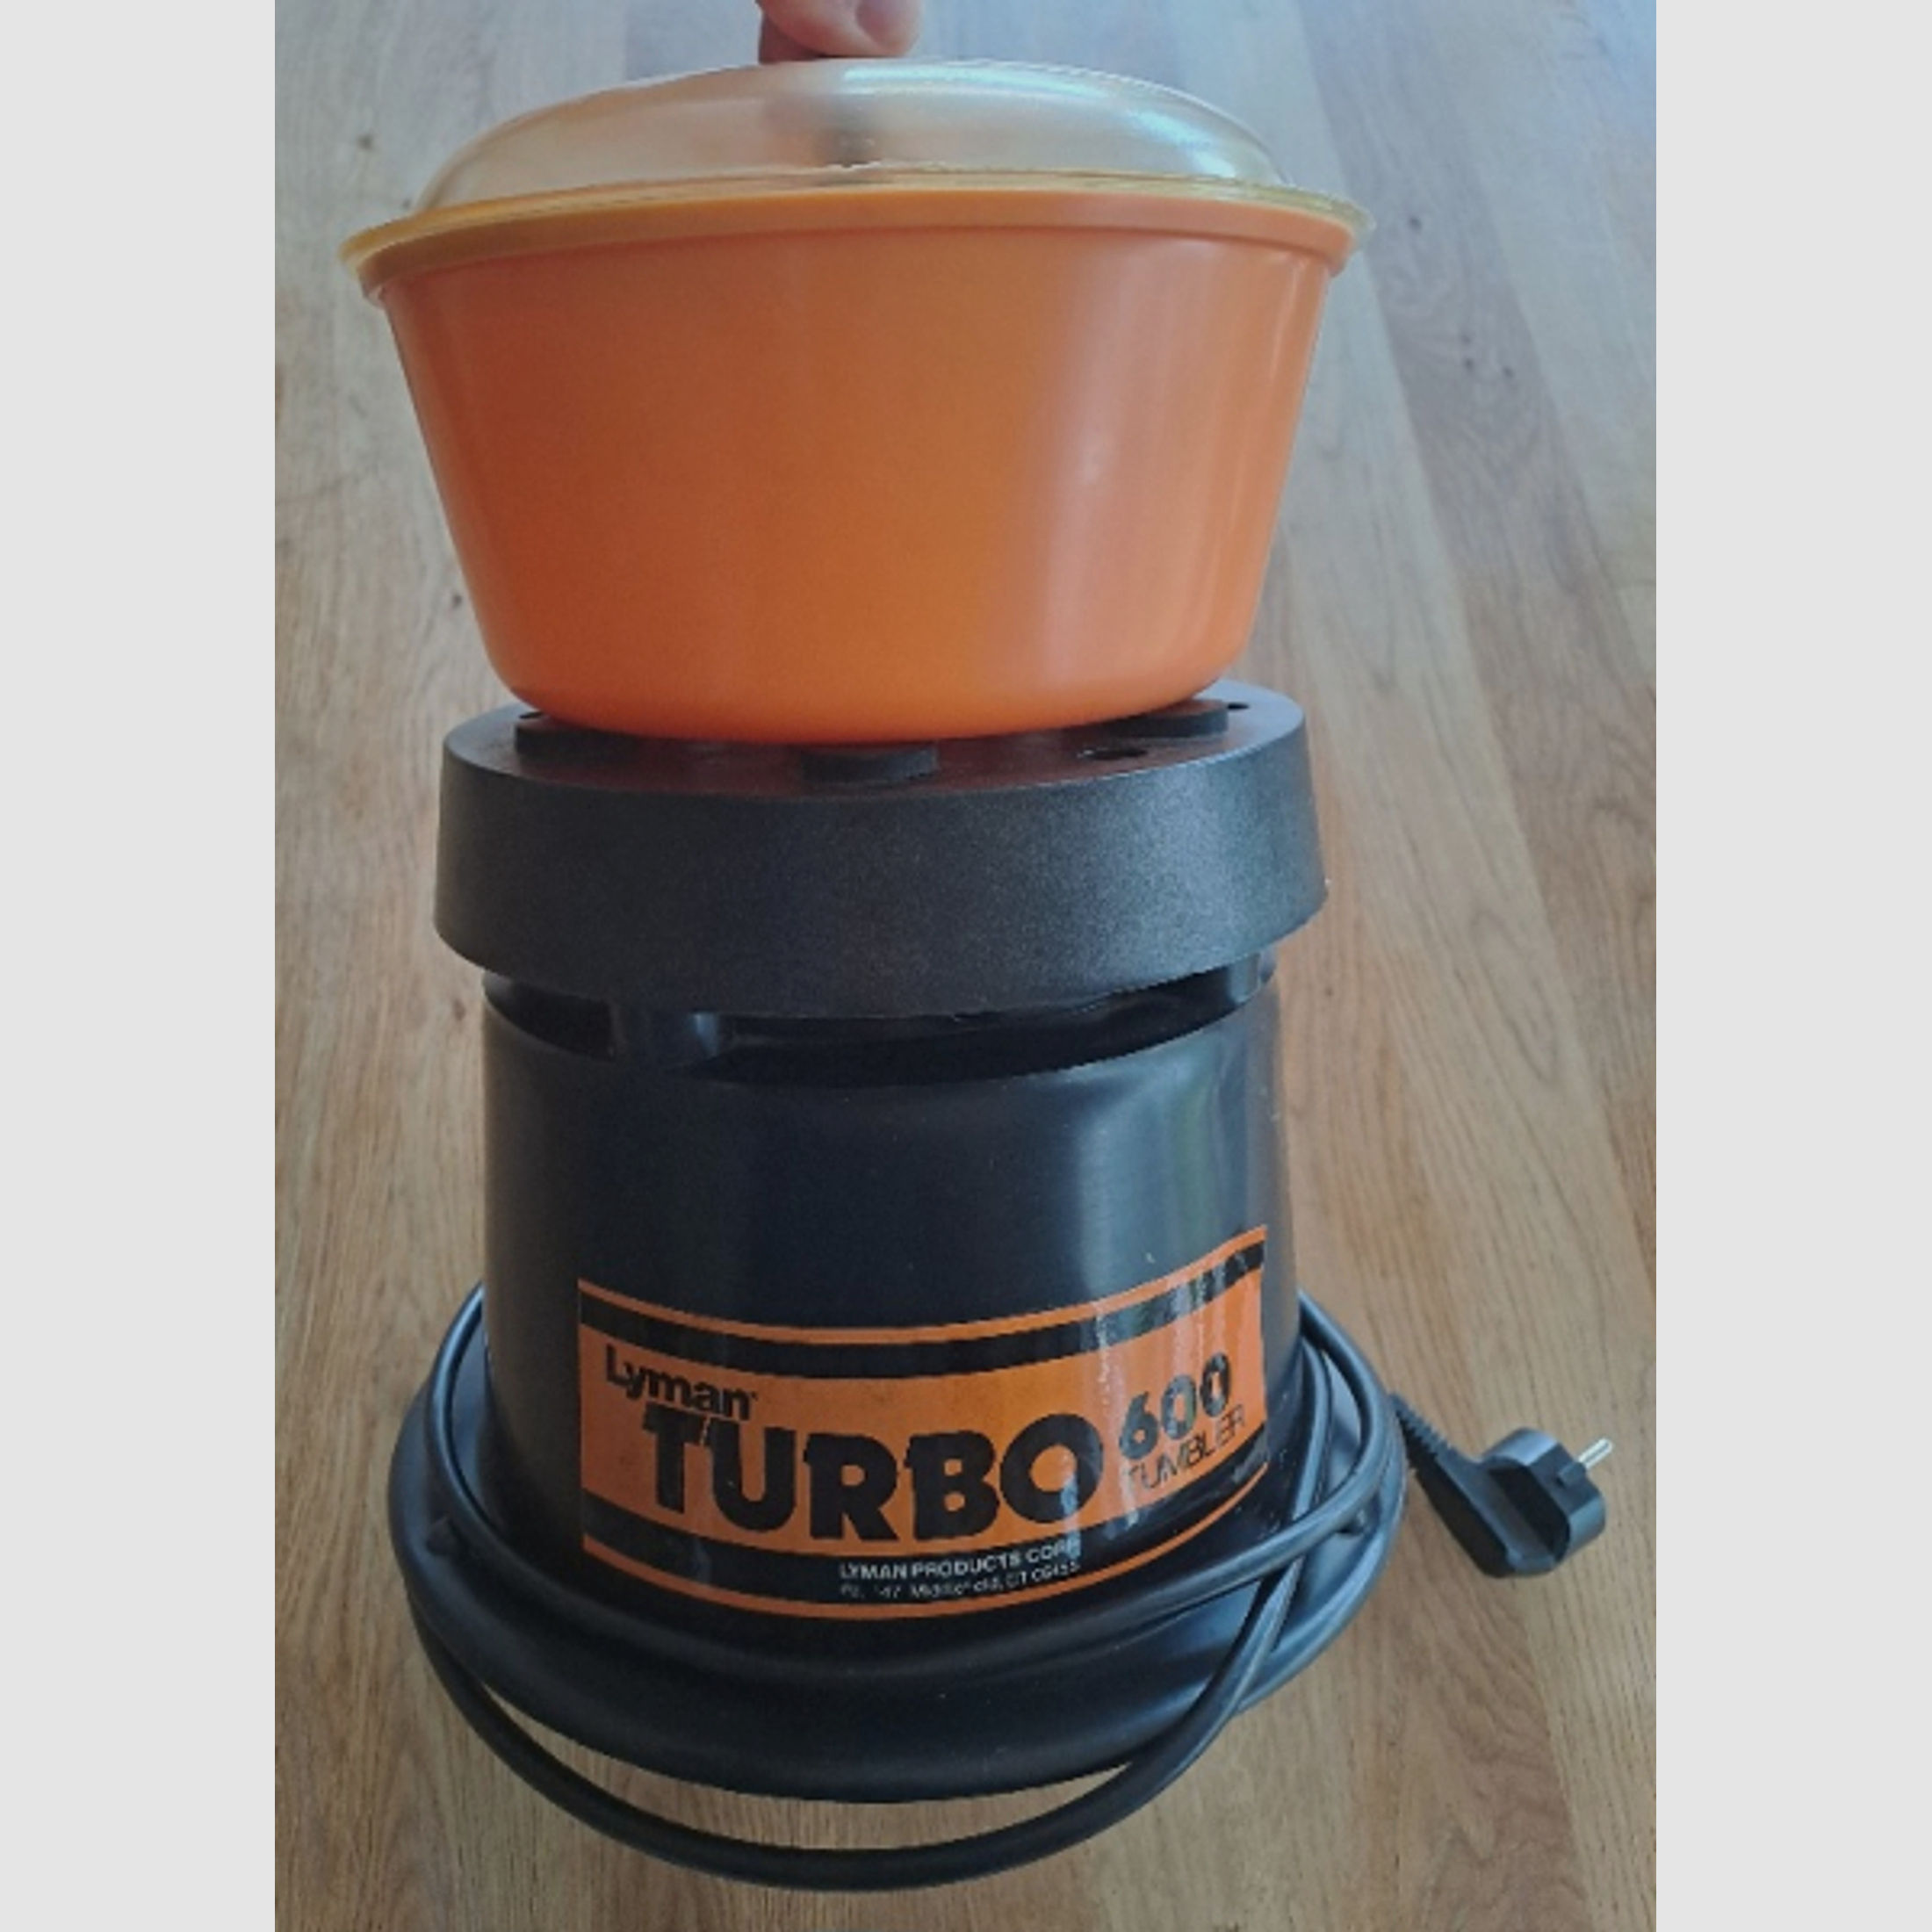 Hülsenpoliergerät Lyman Turbo 600 Tumbler